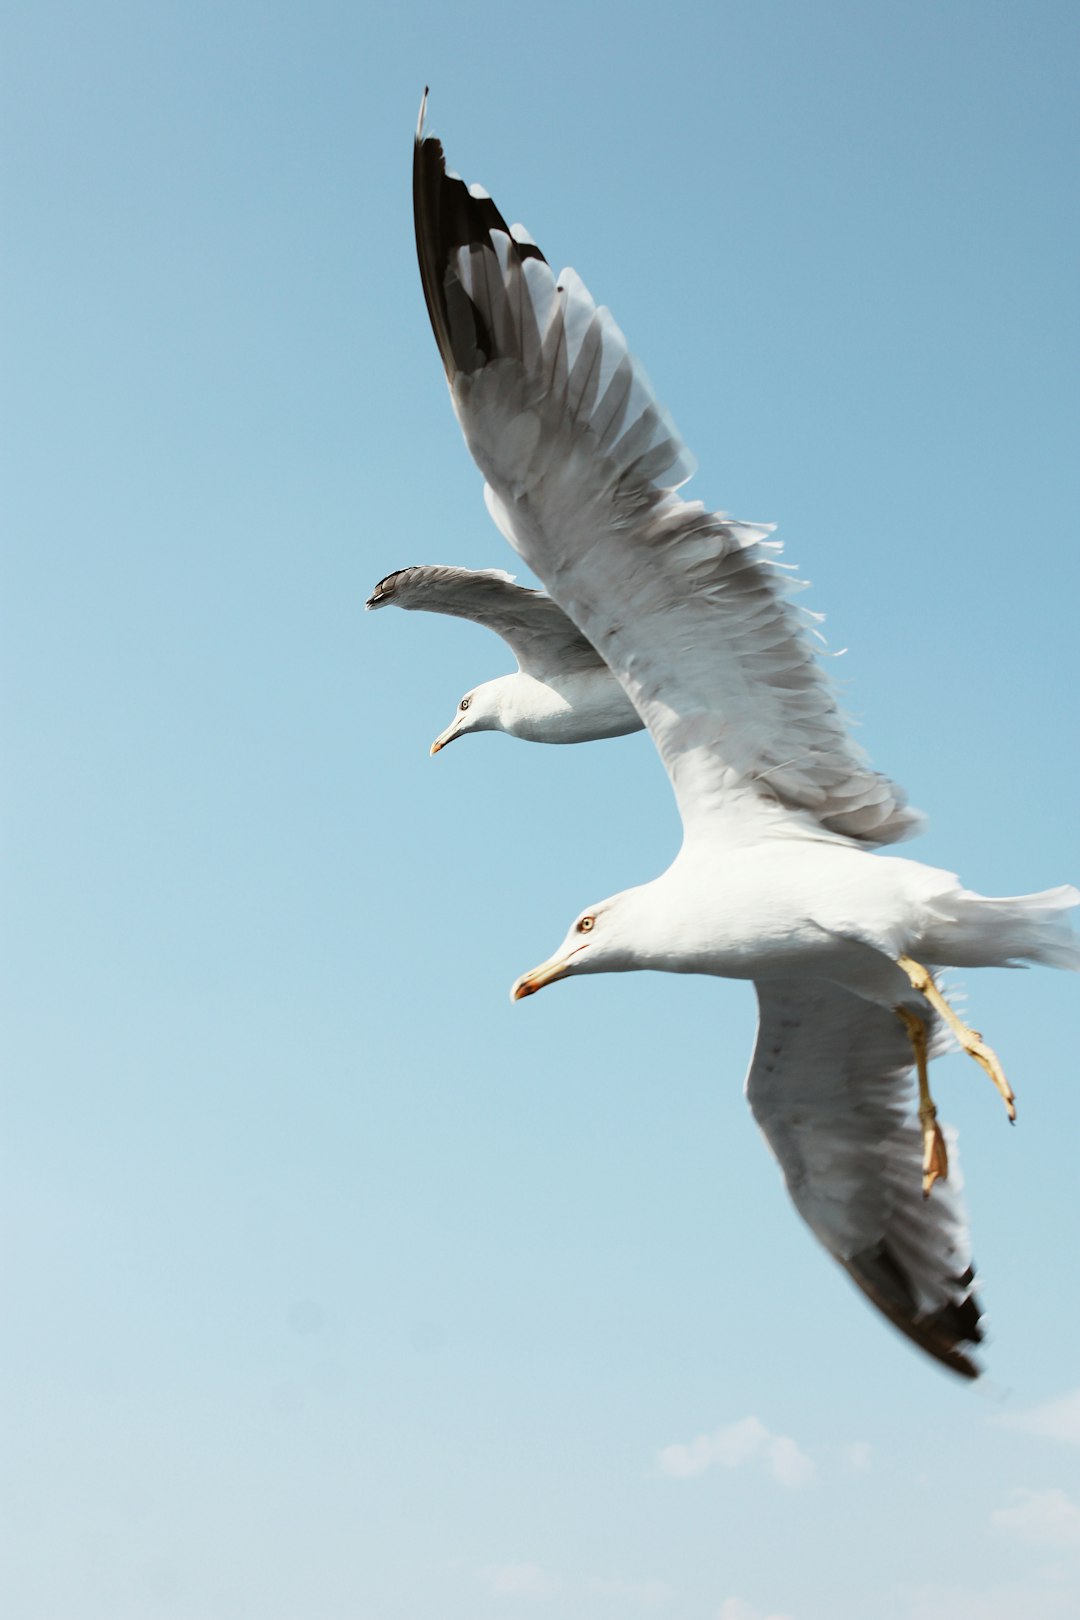 white and grey bird flying during daytime